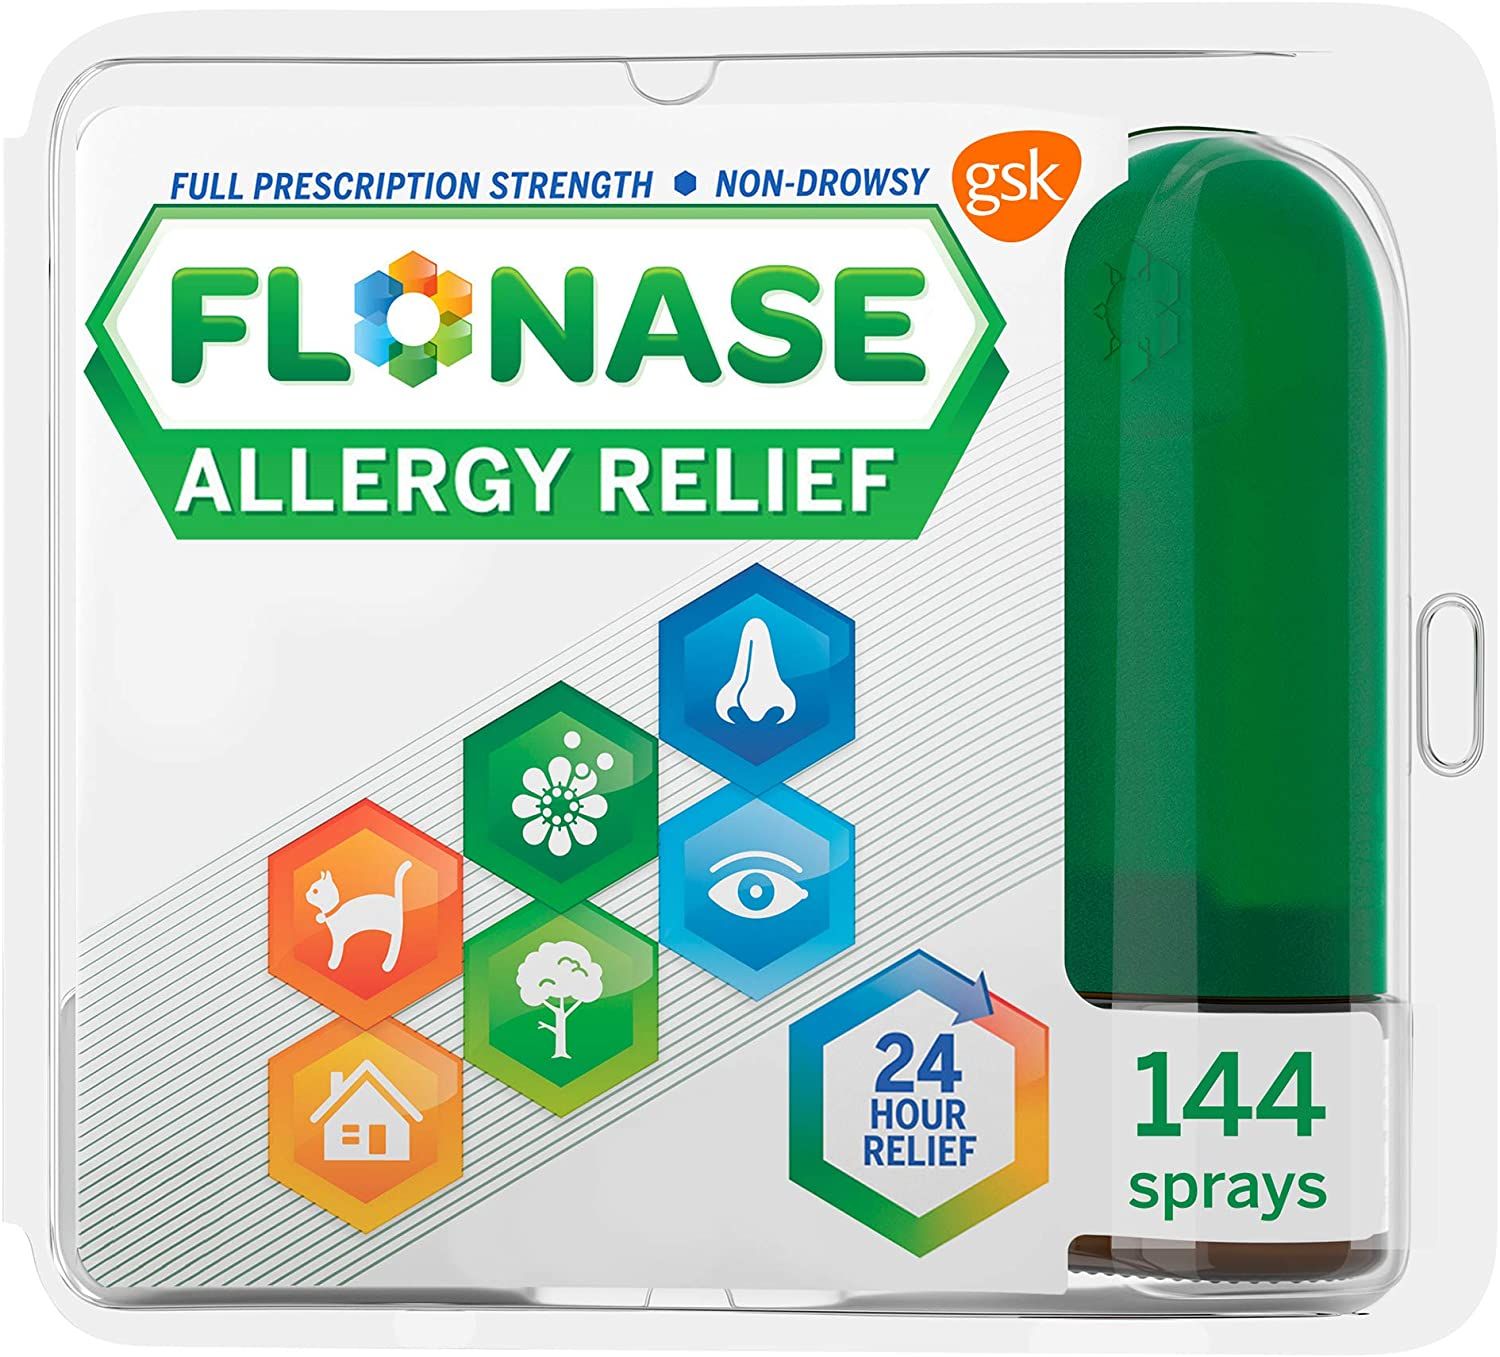 DISCFlonase Allergy 24 Hour Relief Spray - 144 Sprays